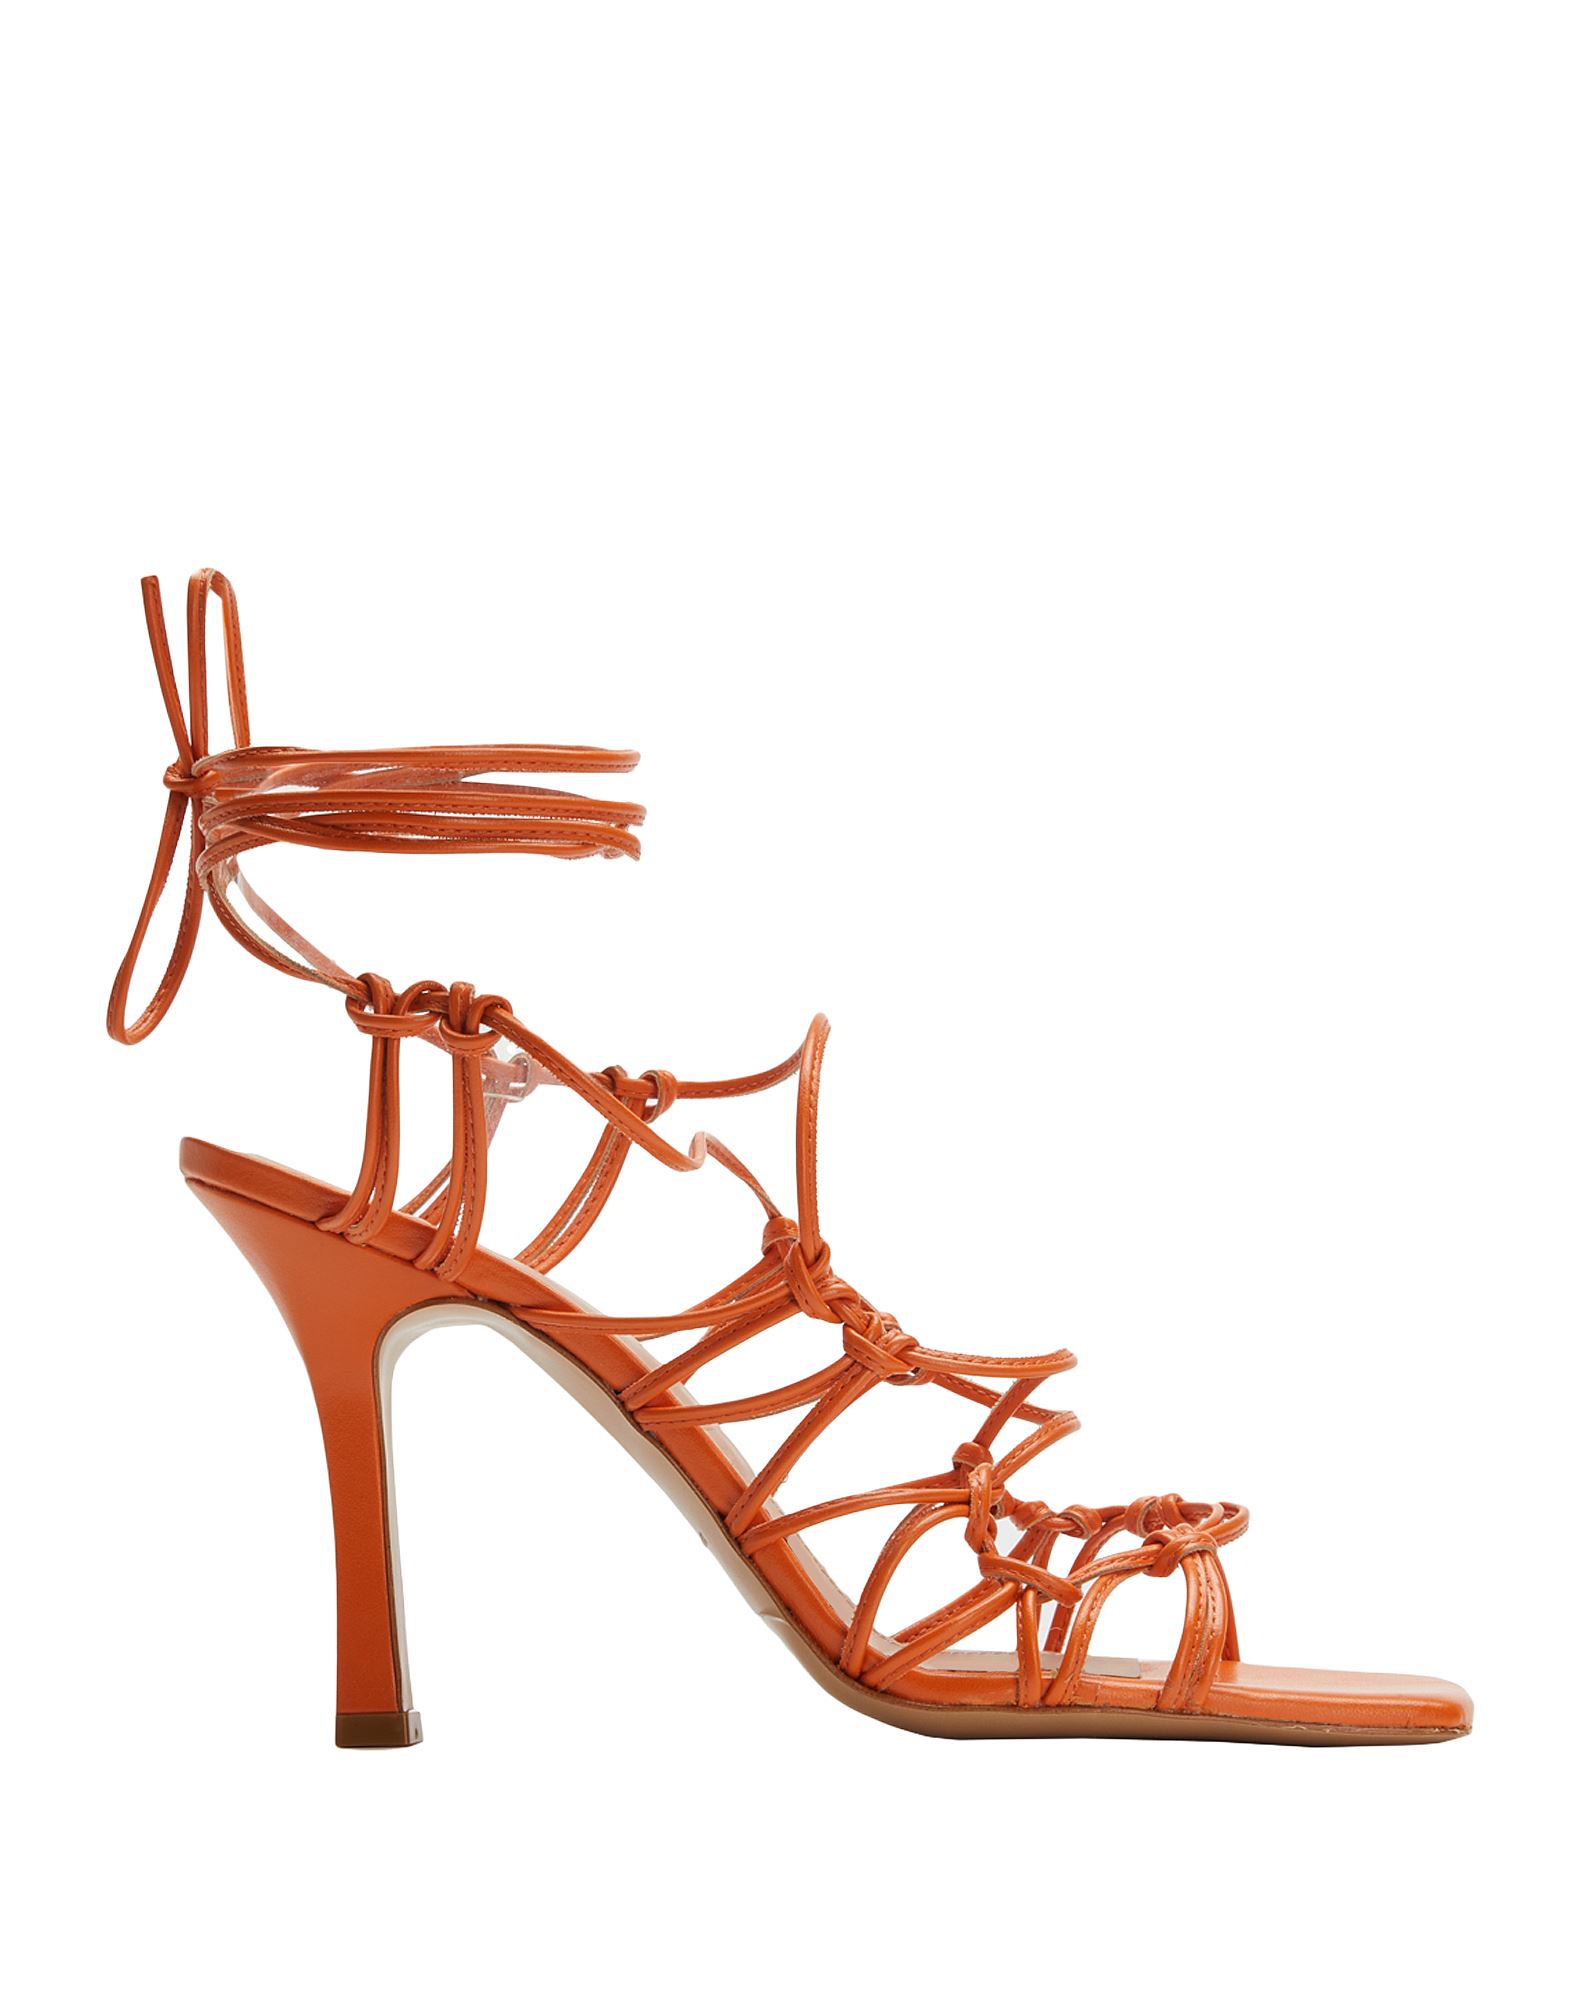 8 By Yoox Sandals In Orange